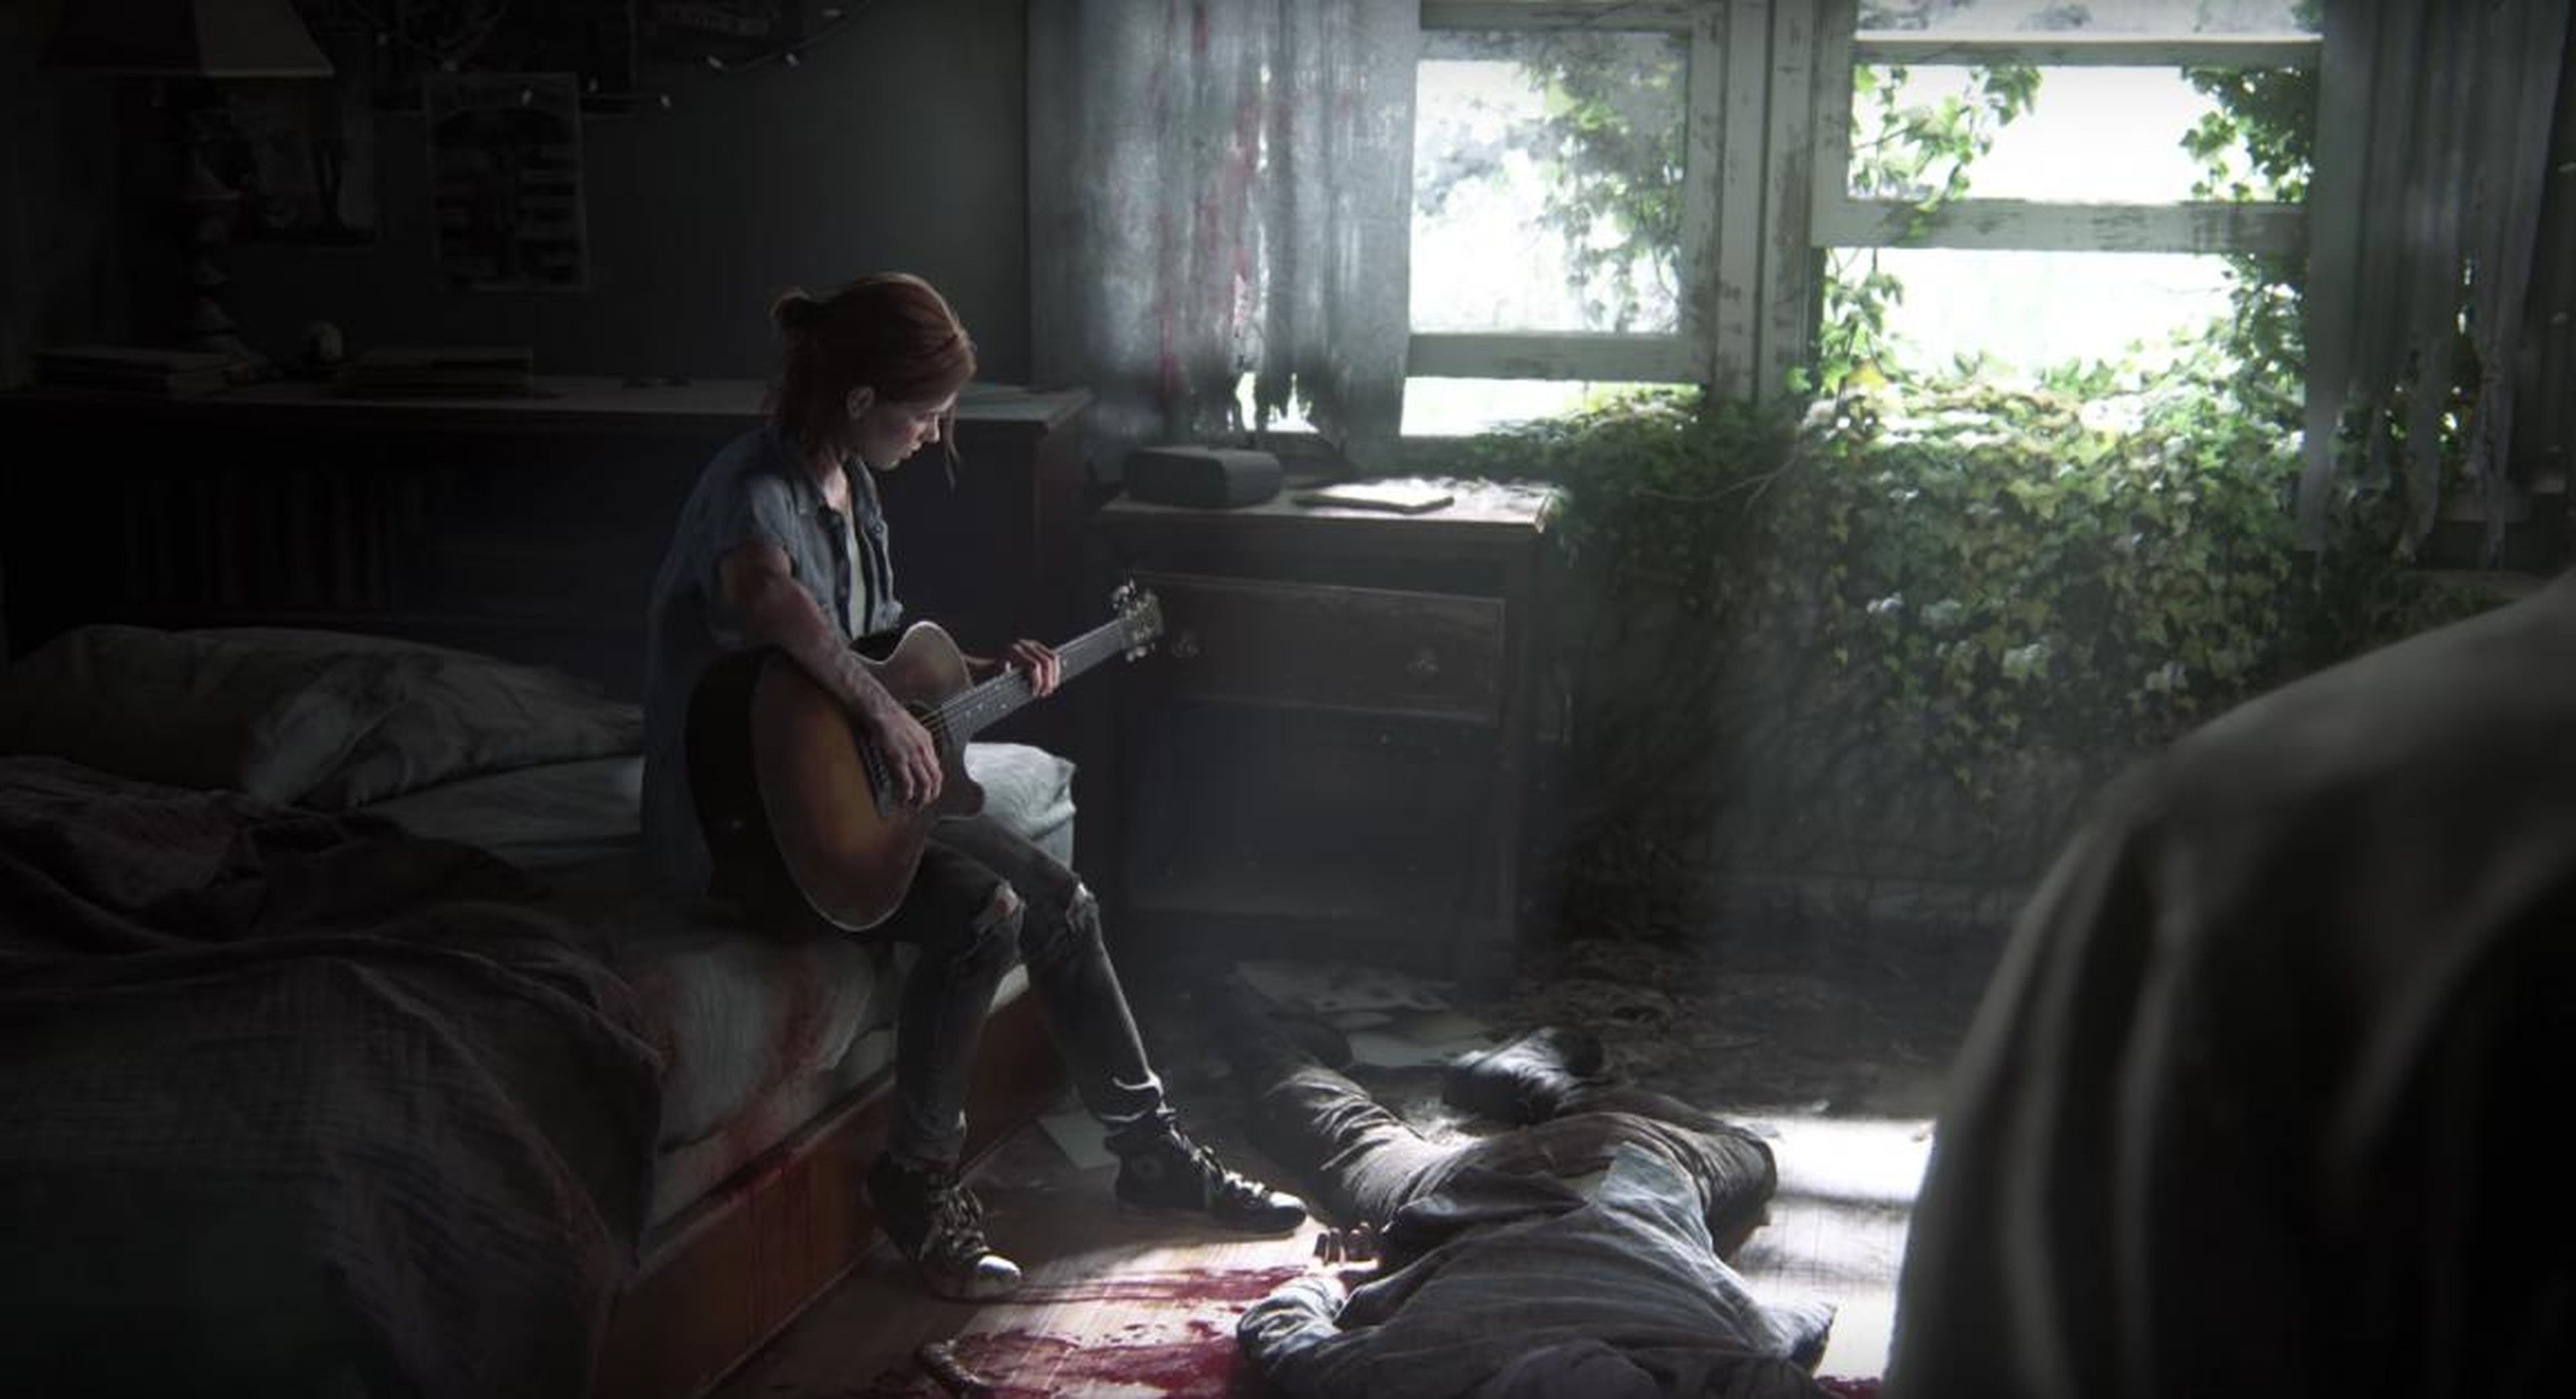 The Last Of Us Part II 2021 4k Wallpaper,HD Games Wallpapers,4k